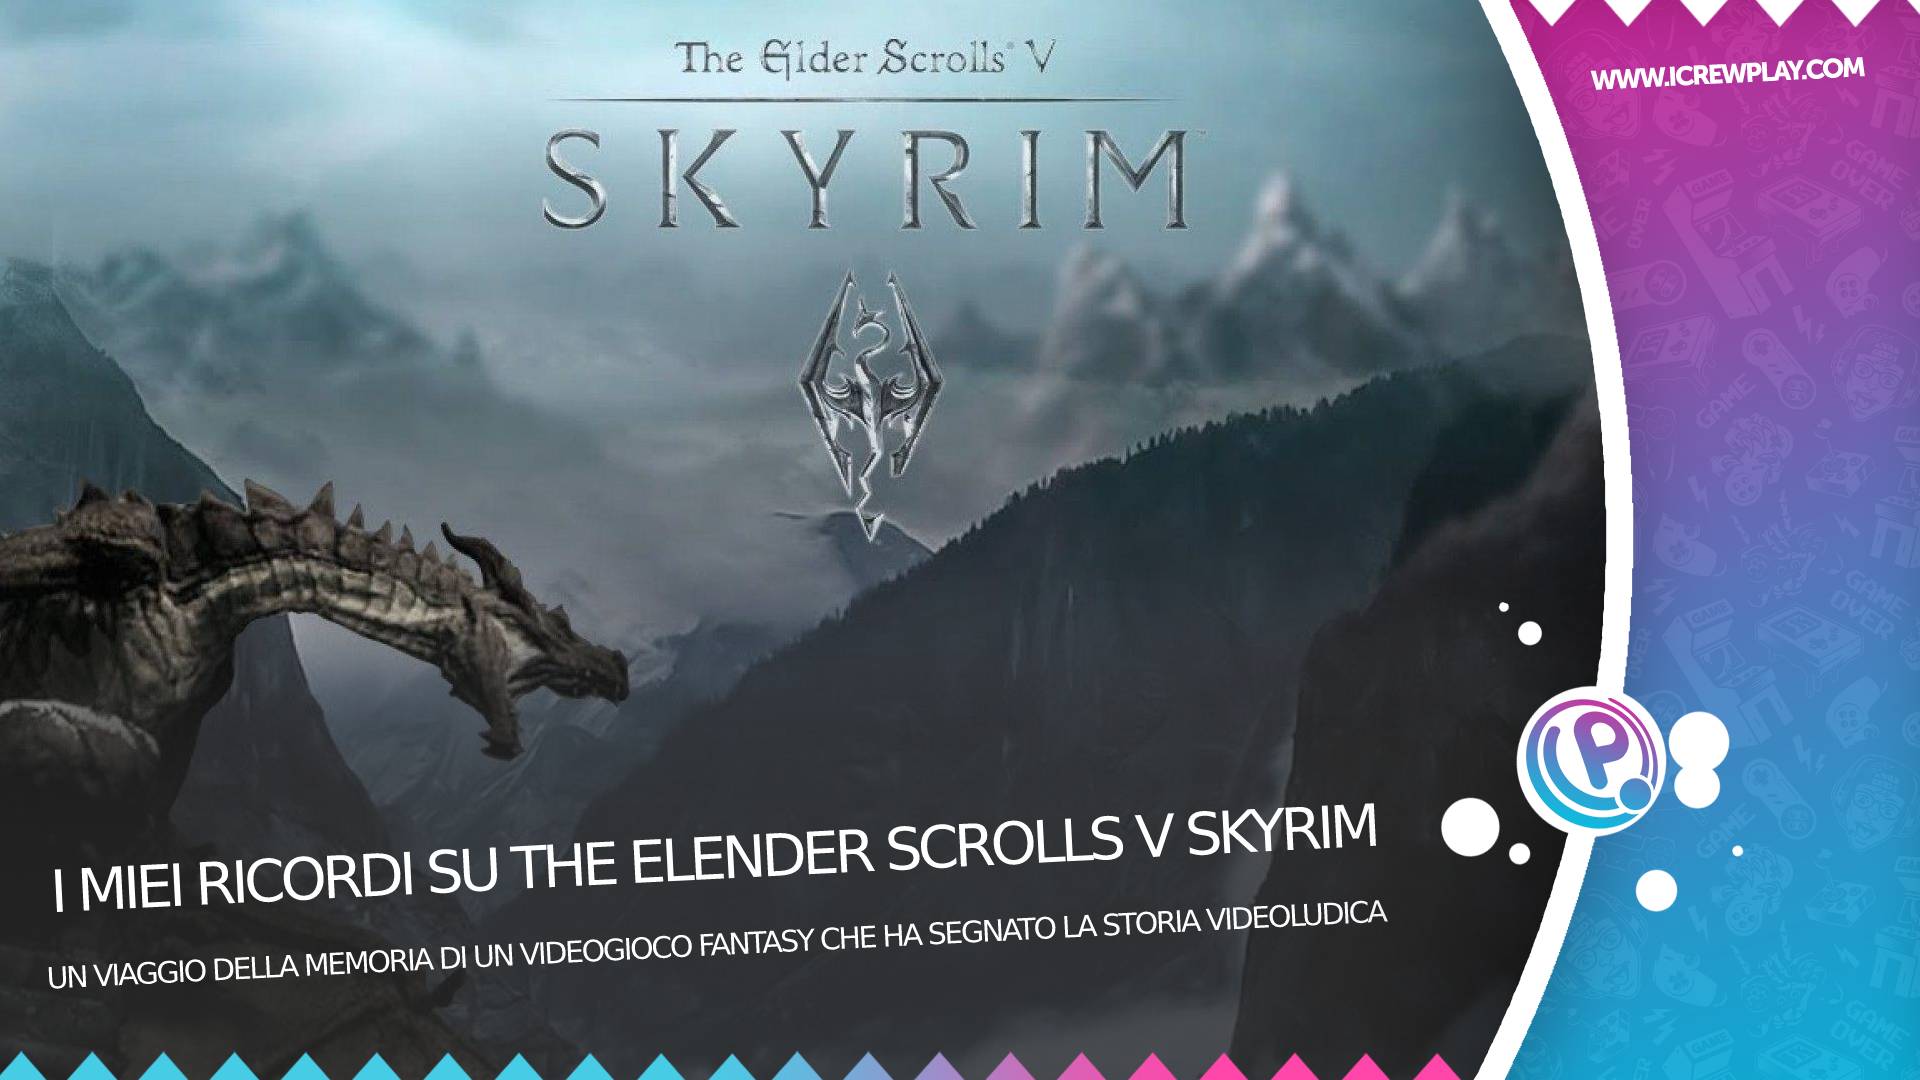 I Miei ricordi su The Elder Scrolls V Skyrim 8